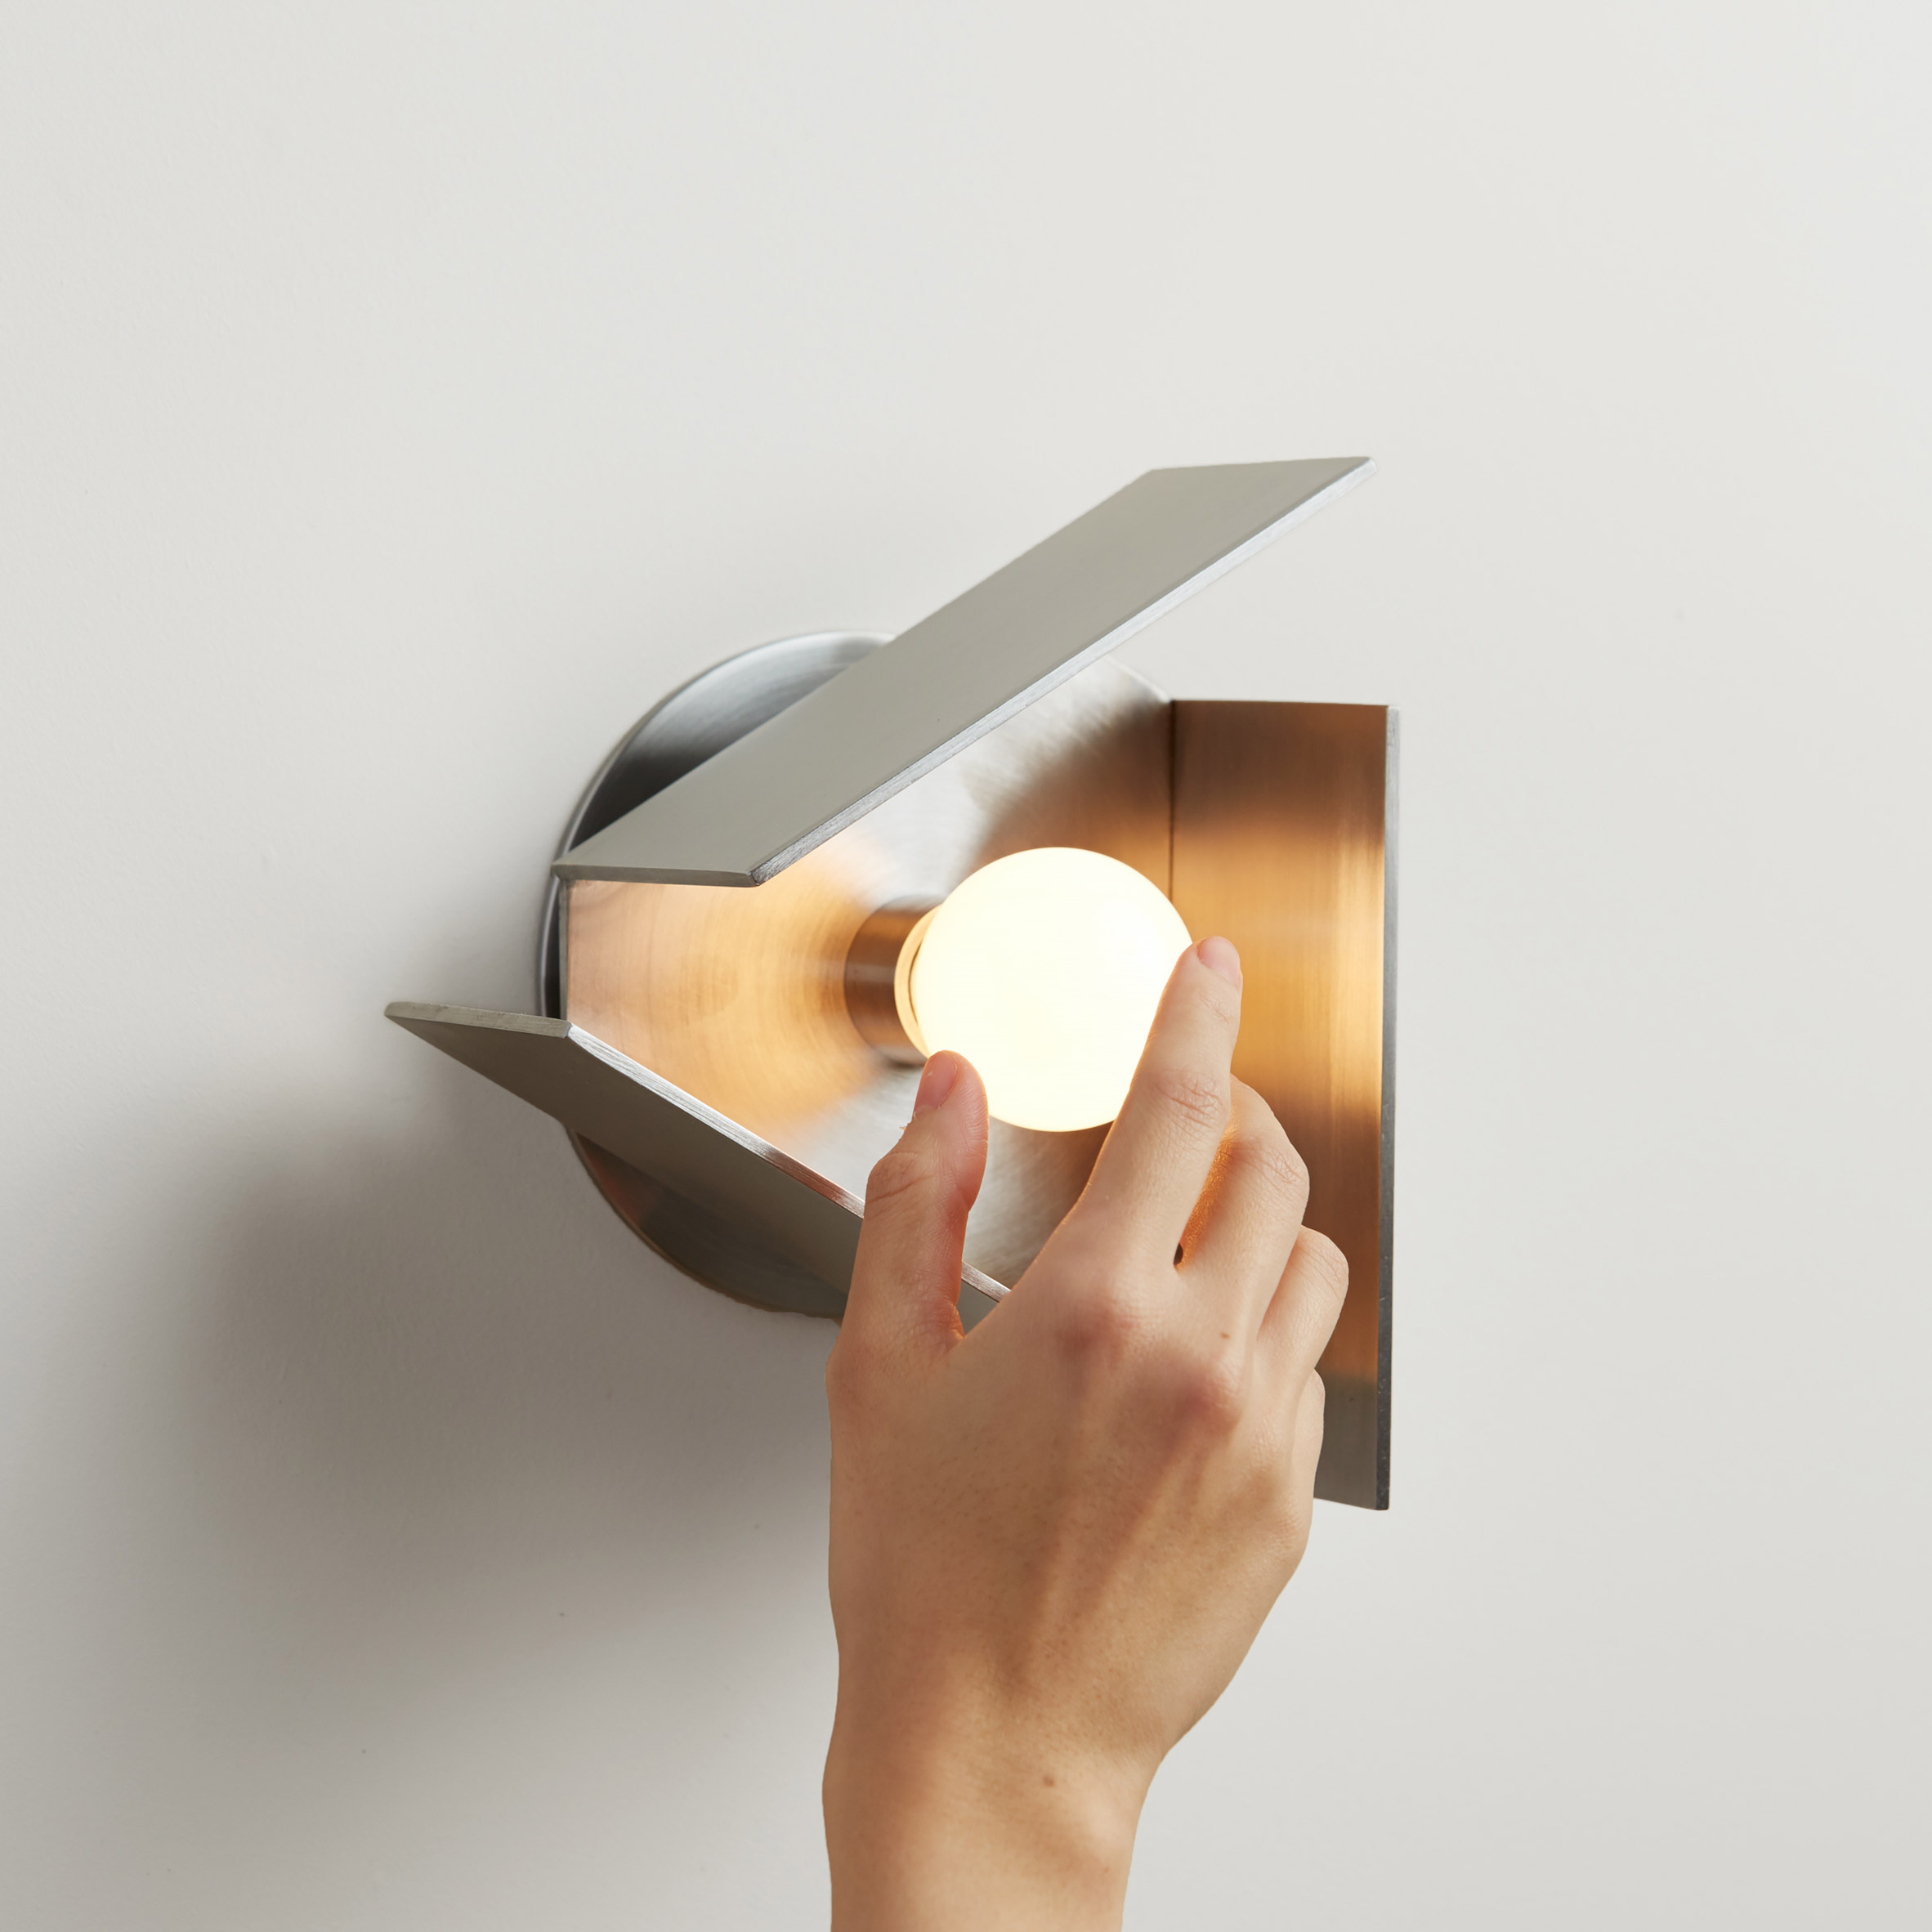 Louis Vuitton — Studio Fractal — Architectural lighting design